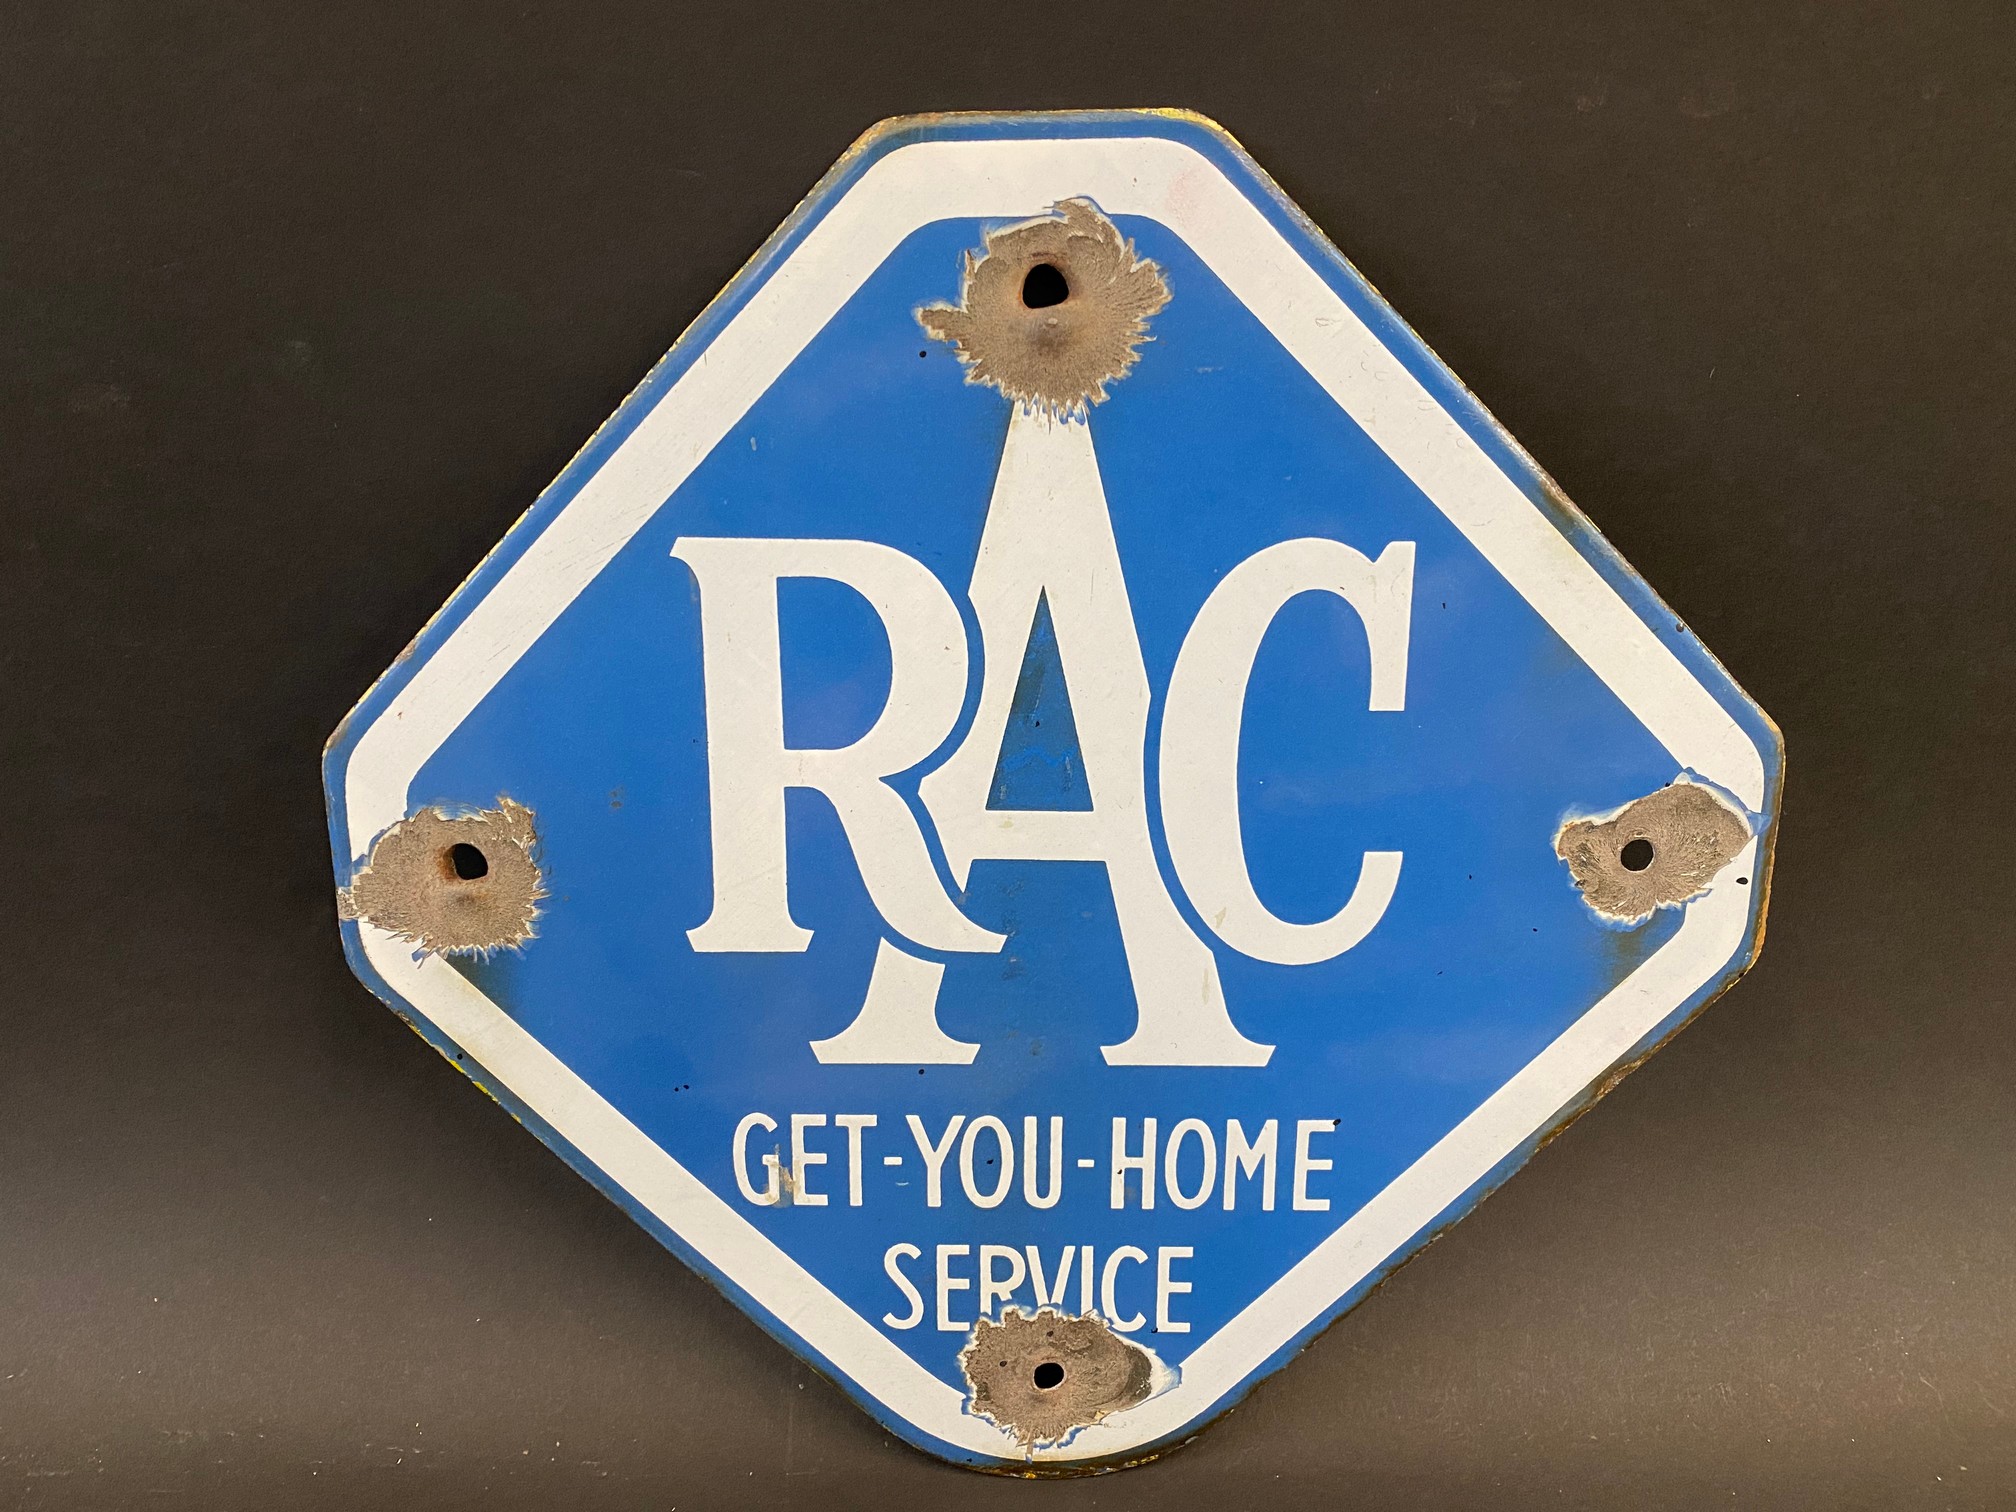 An RAC Get-You-Home Service lozenge shaped enamel sign, 10 1/2 x 10 1/2".